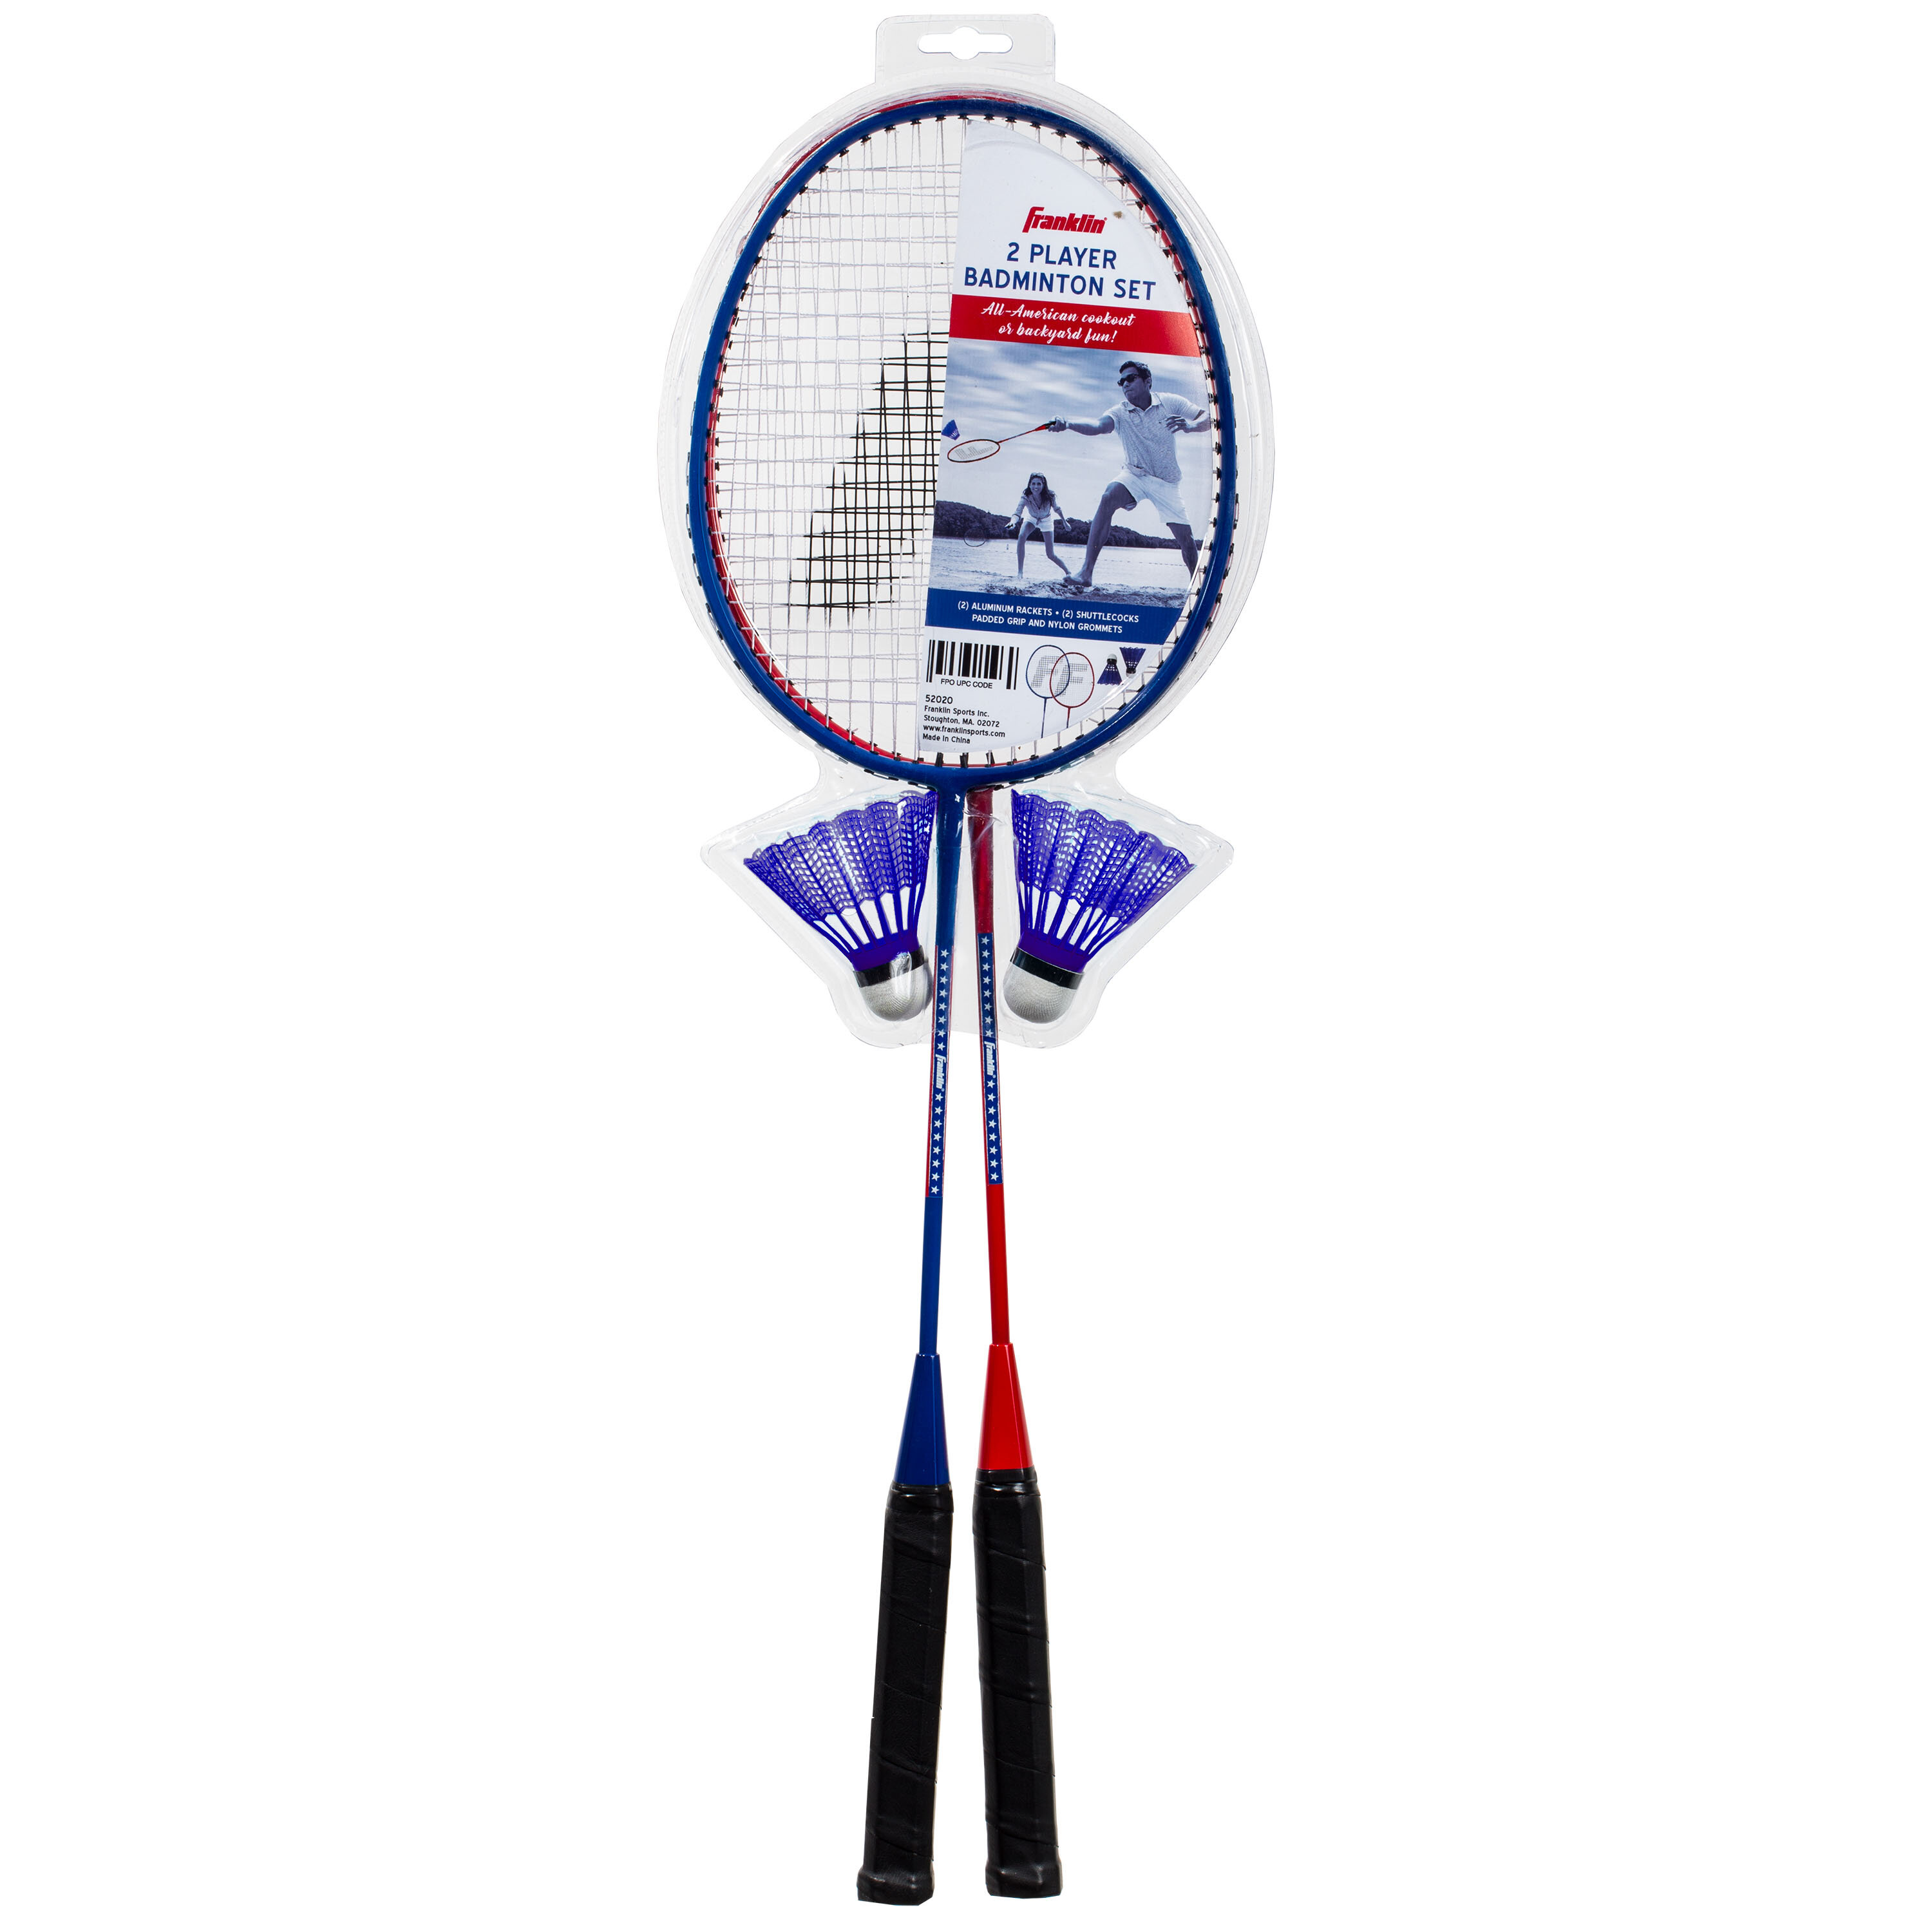 2 Players Badminton Racket Ball Set Light Weight Non-slip Handle Grip T-joint 